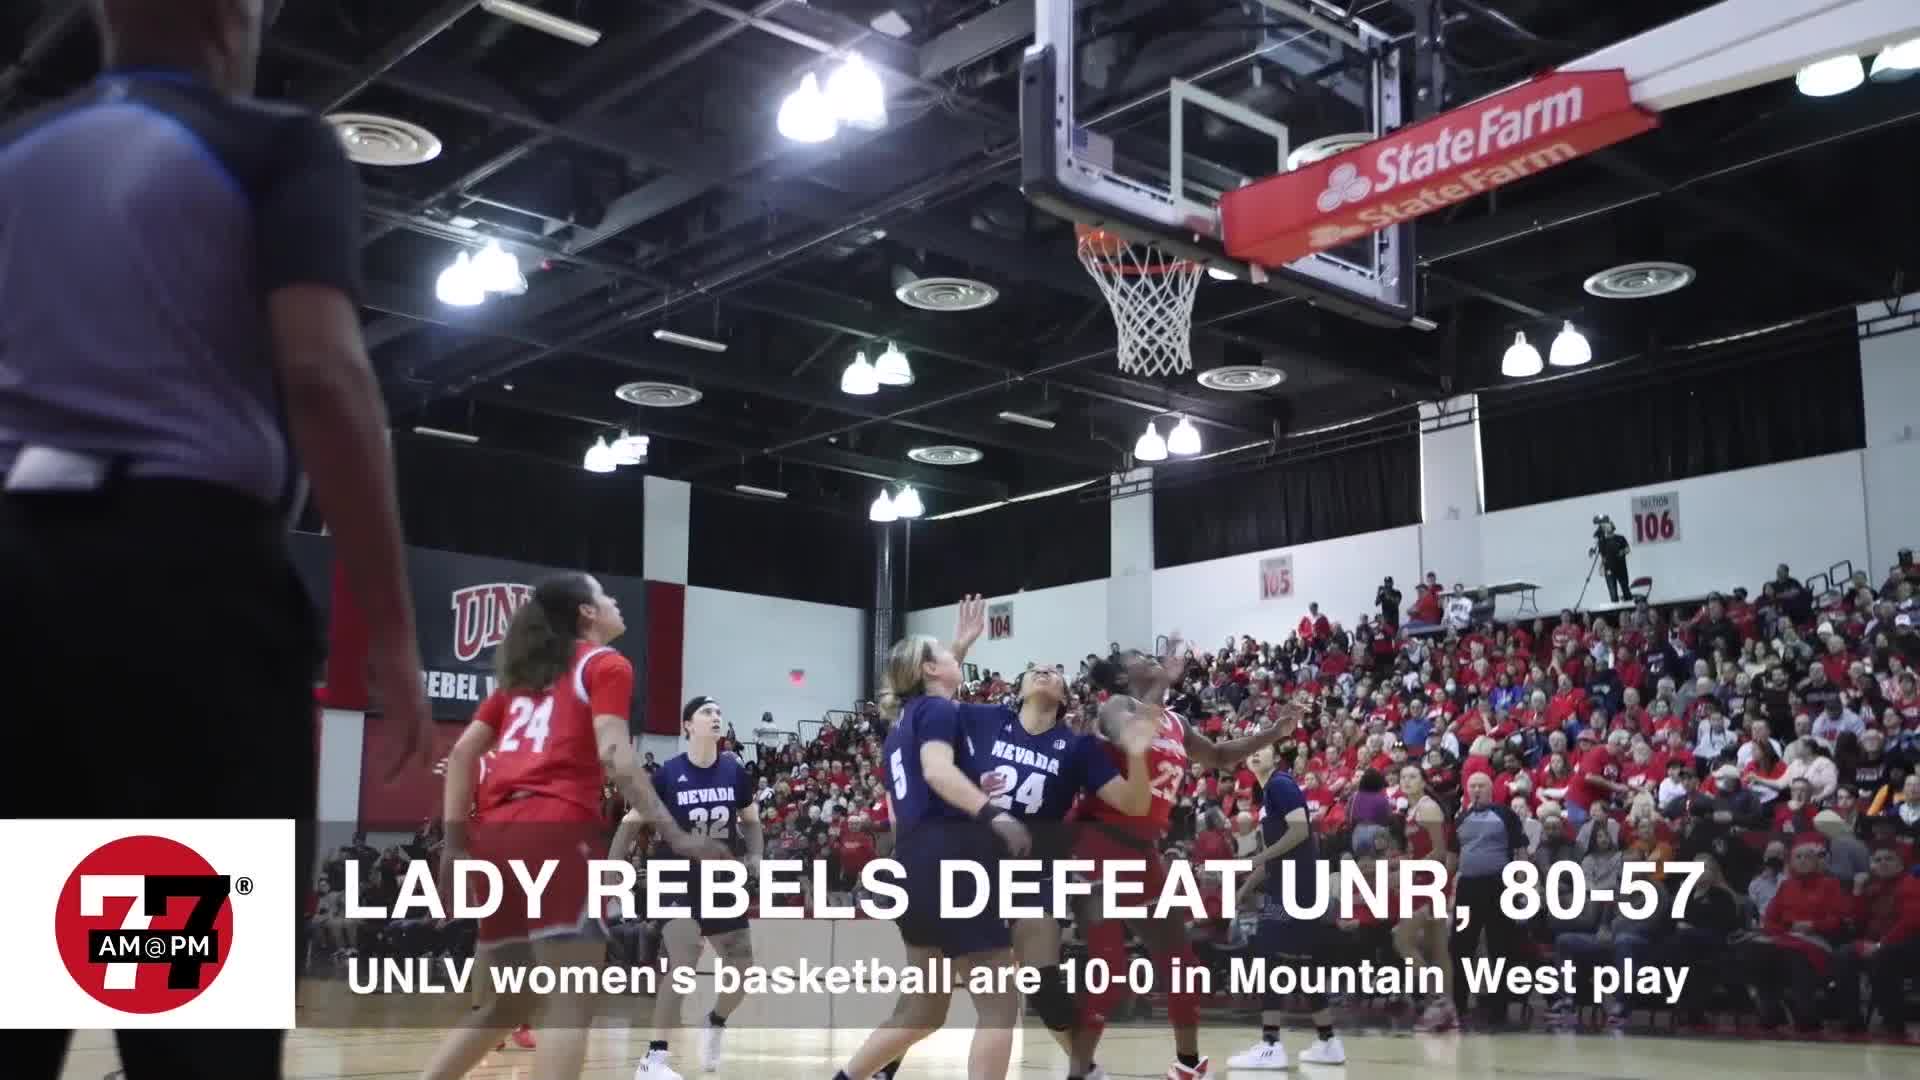 Lady Rebels defeat UNR